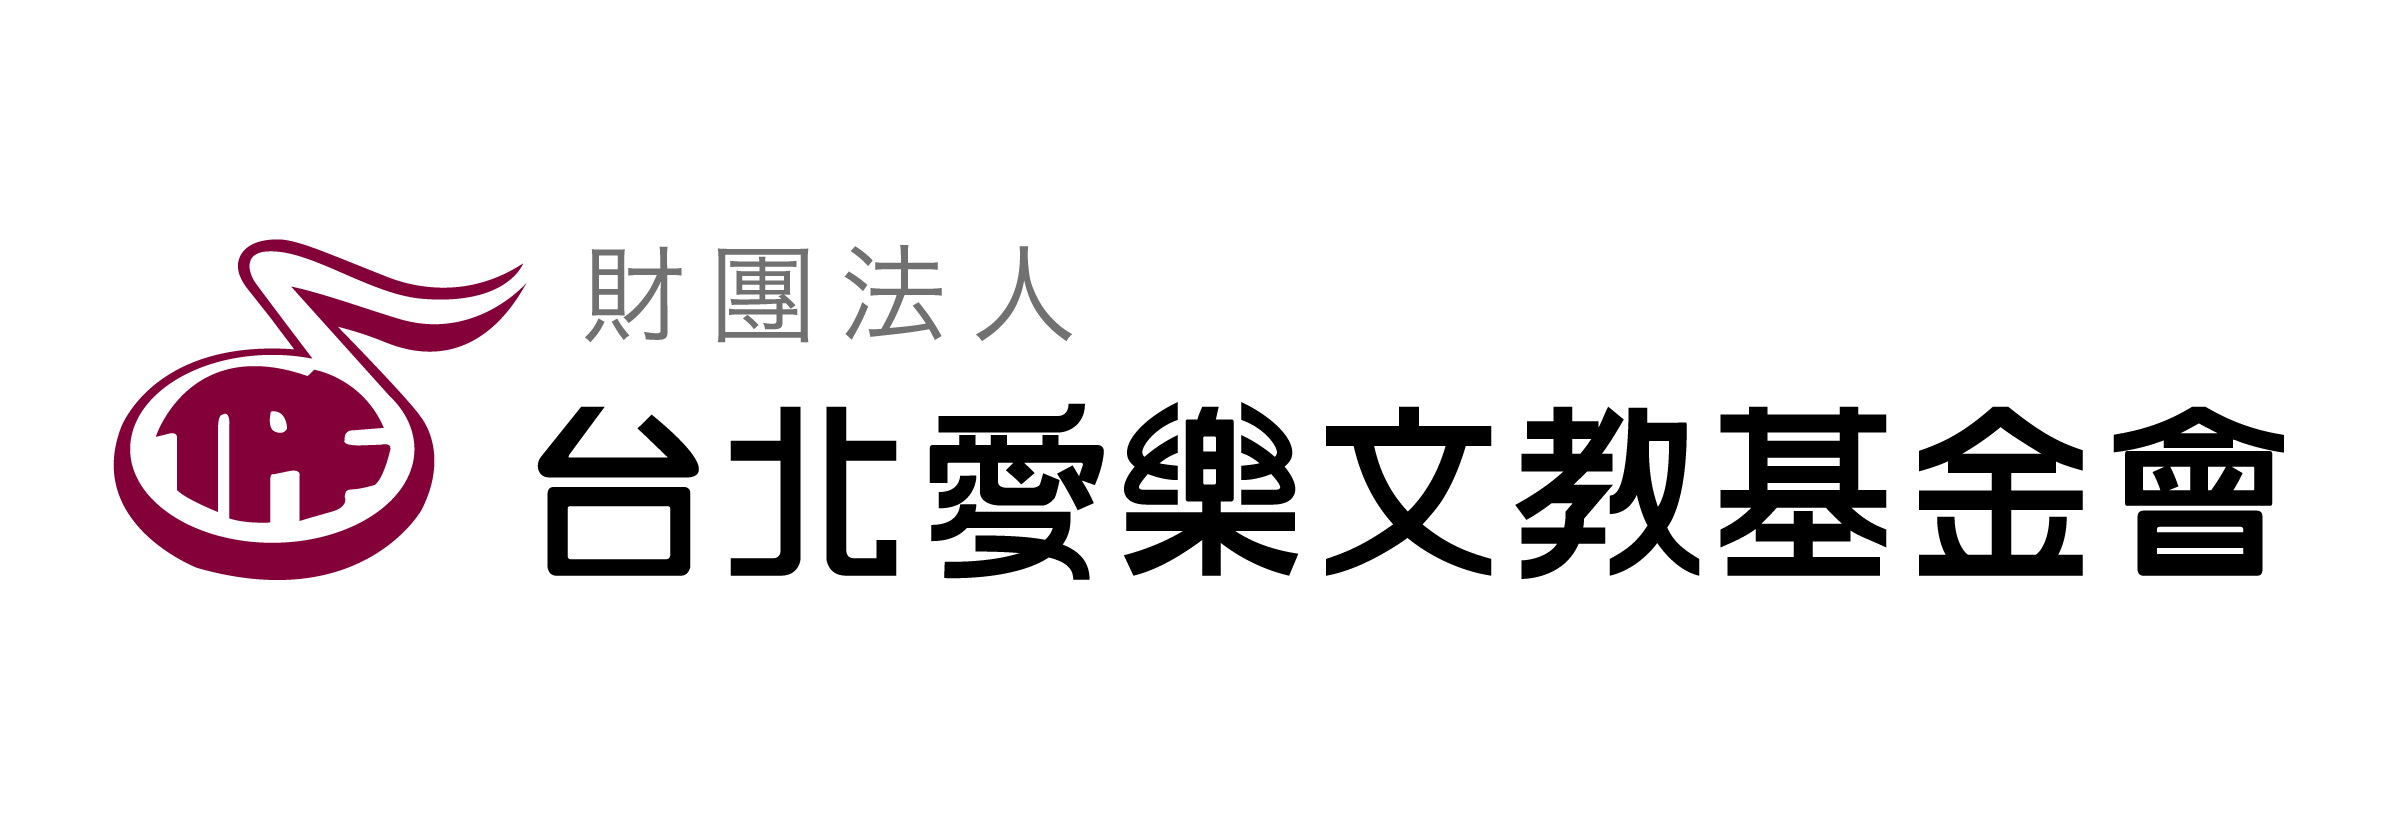 TICF Logo_台北愛樂文教基金會.png